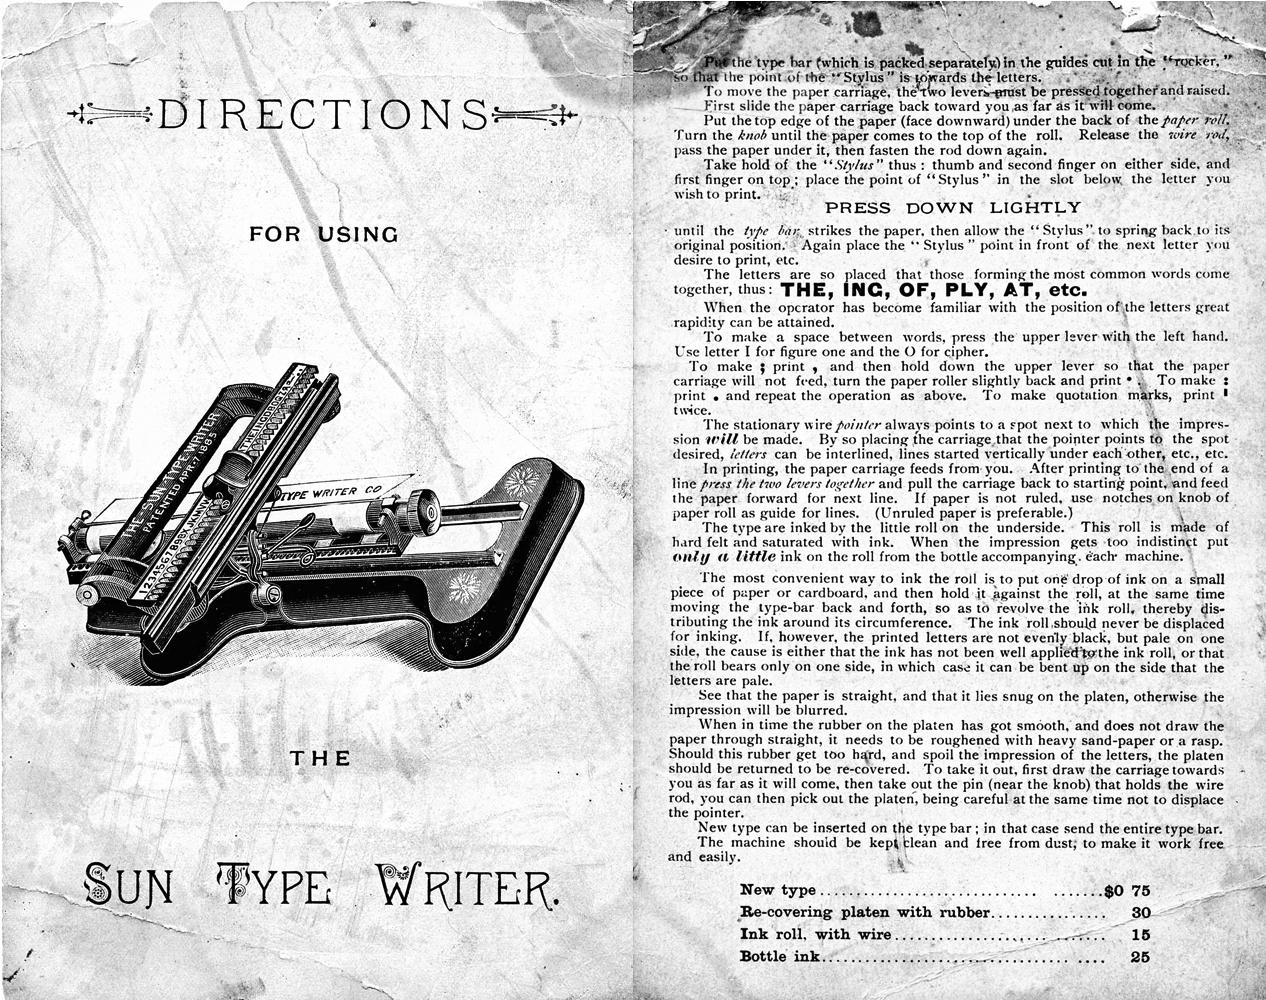 The Typewriter Revolution: A Typist's Companion for the 21st Century eBook  by Richard Polt - EPUB Book